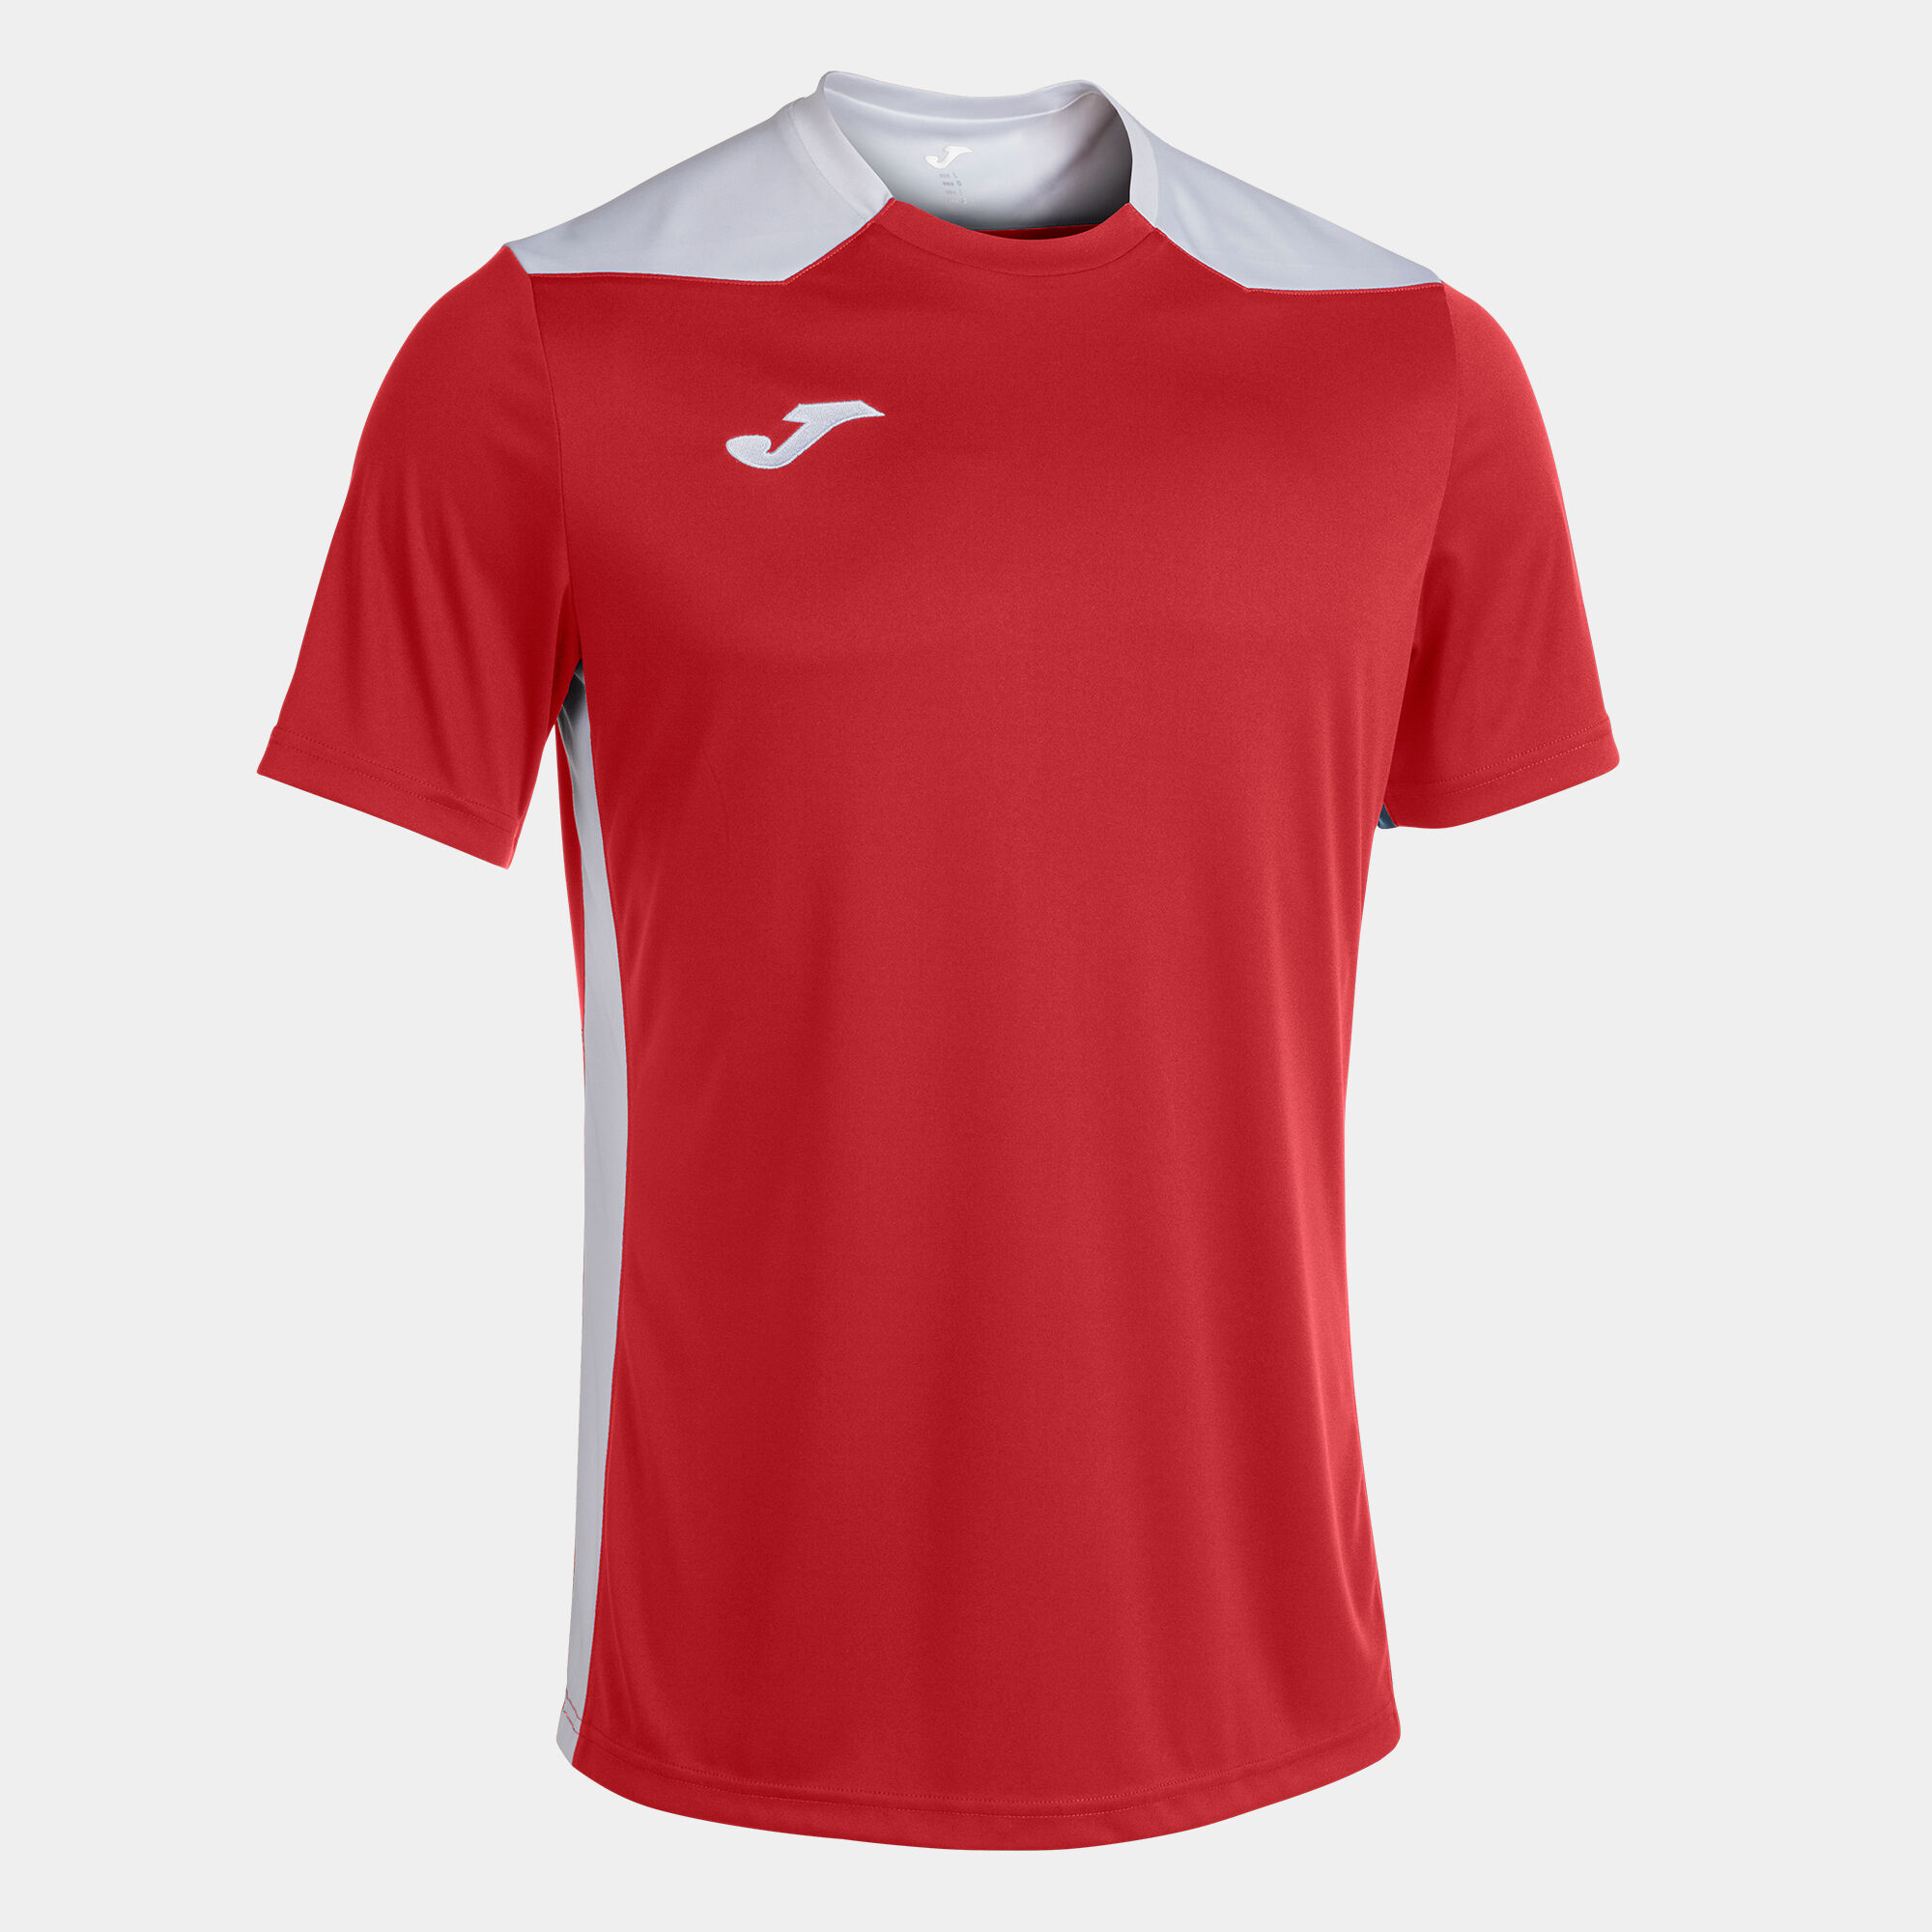 Shirt short sleeve man Championship VI red white